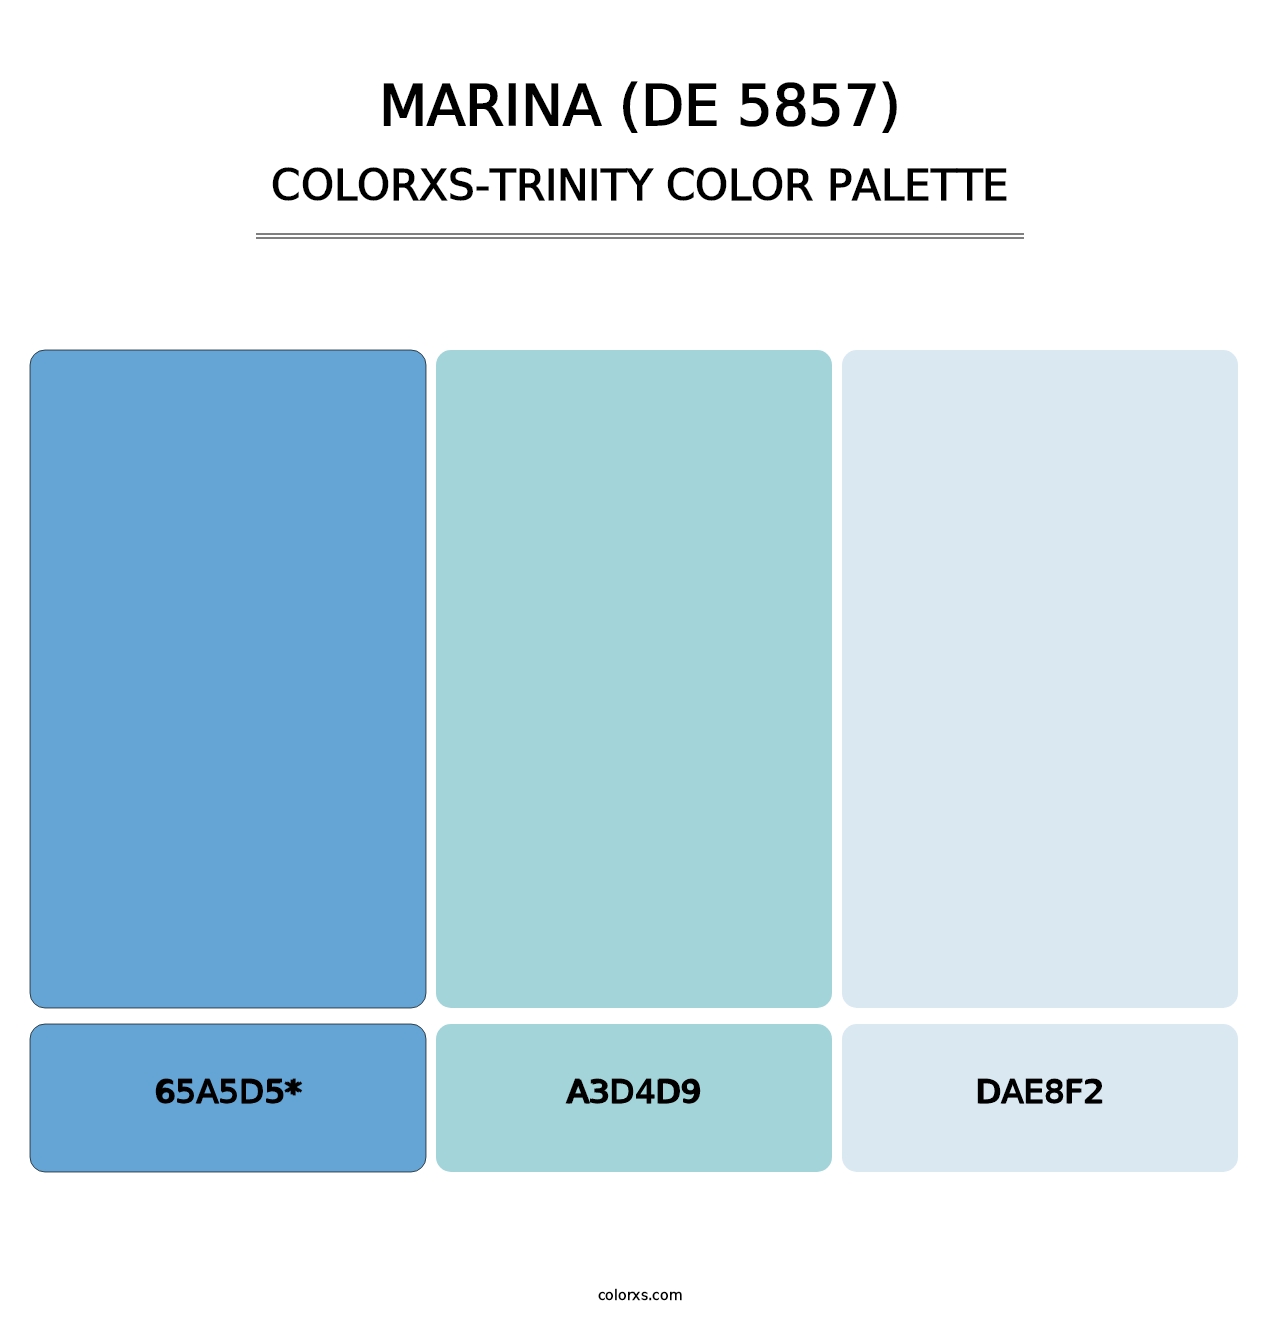 Marina (DE 5857) - Colorxs Trinity Palette